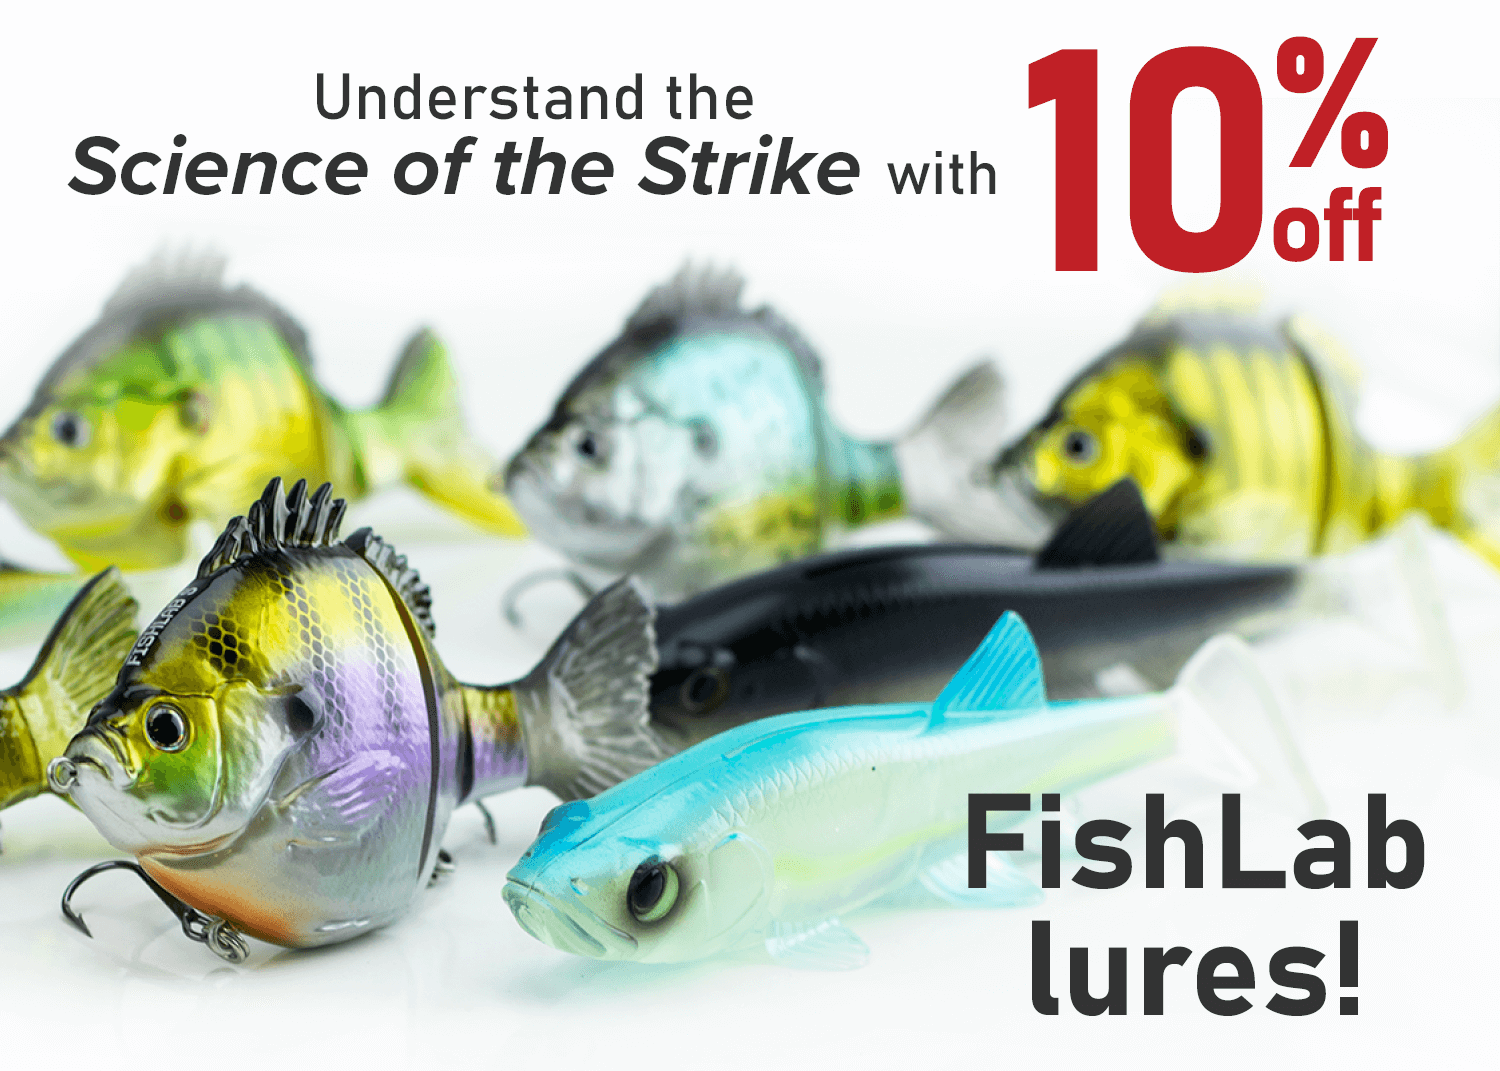 Save 10% on FishLab Lures